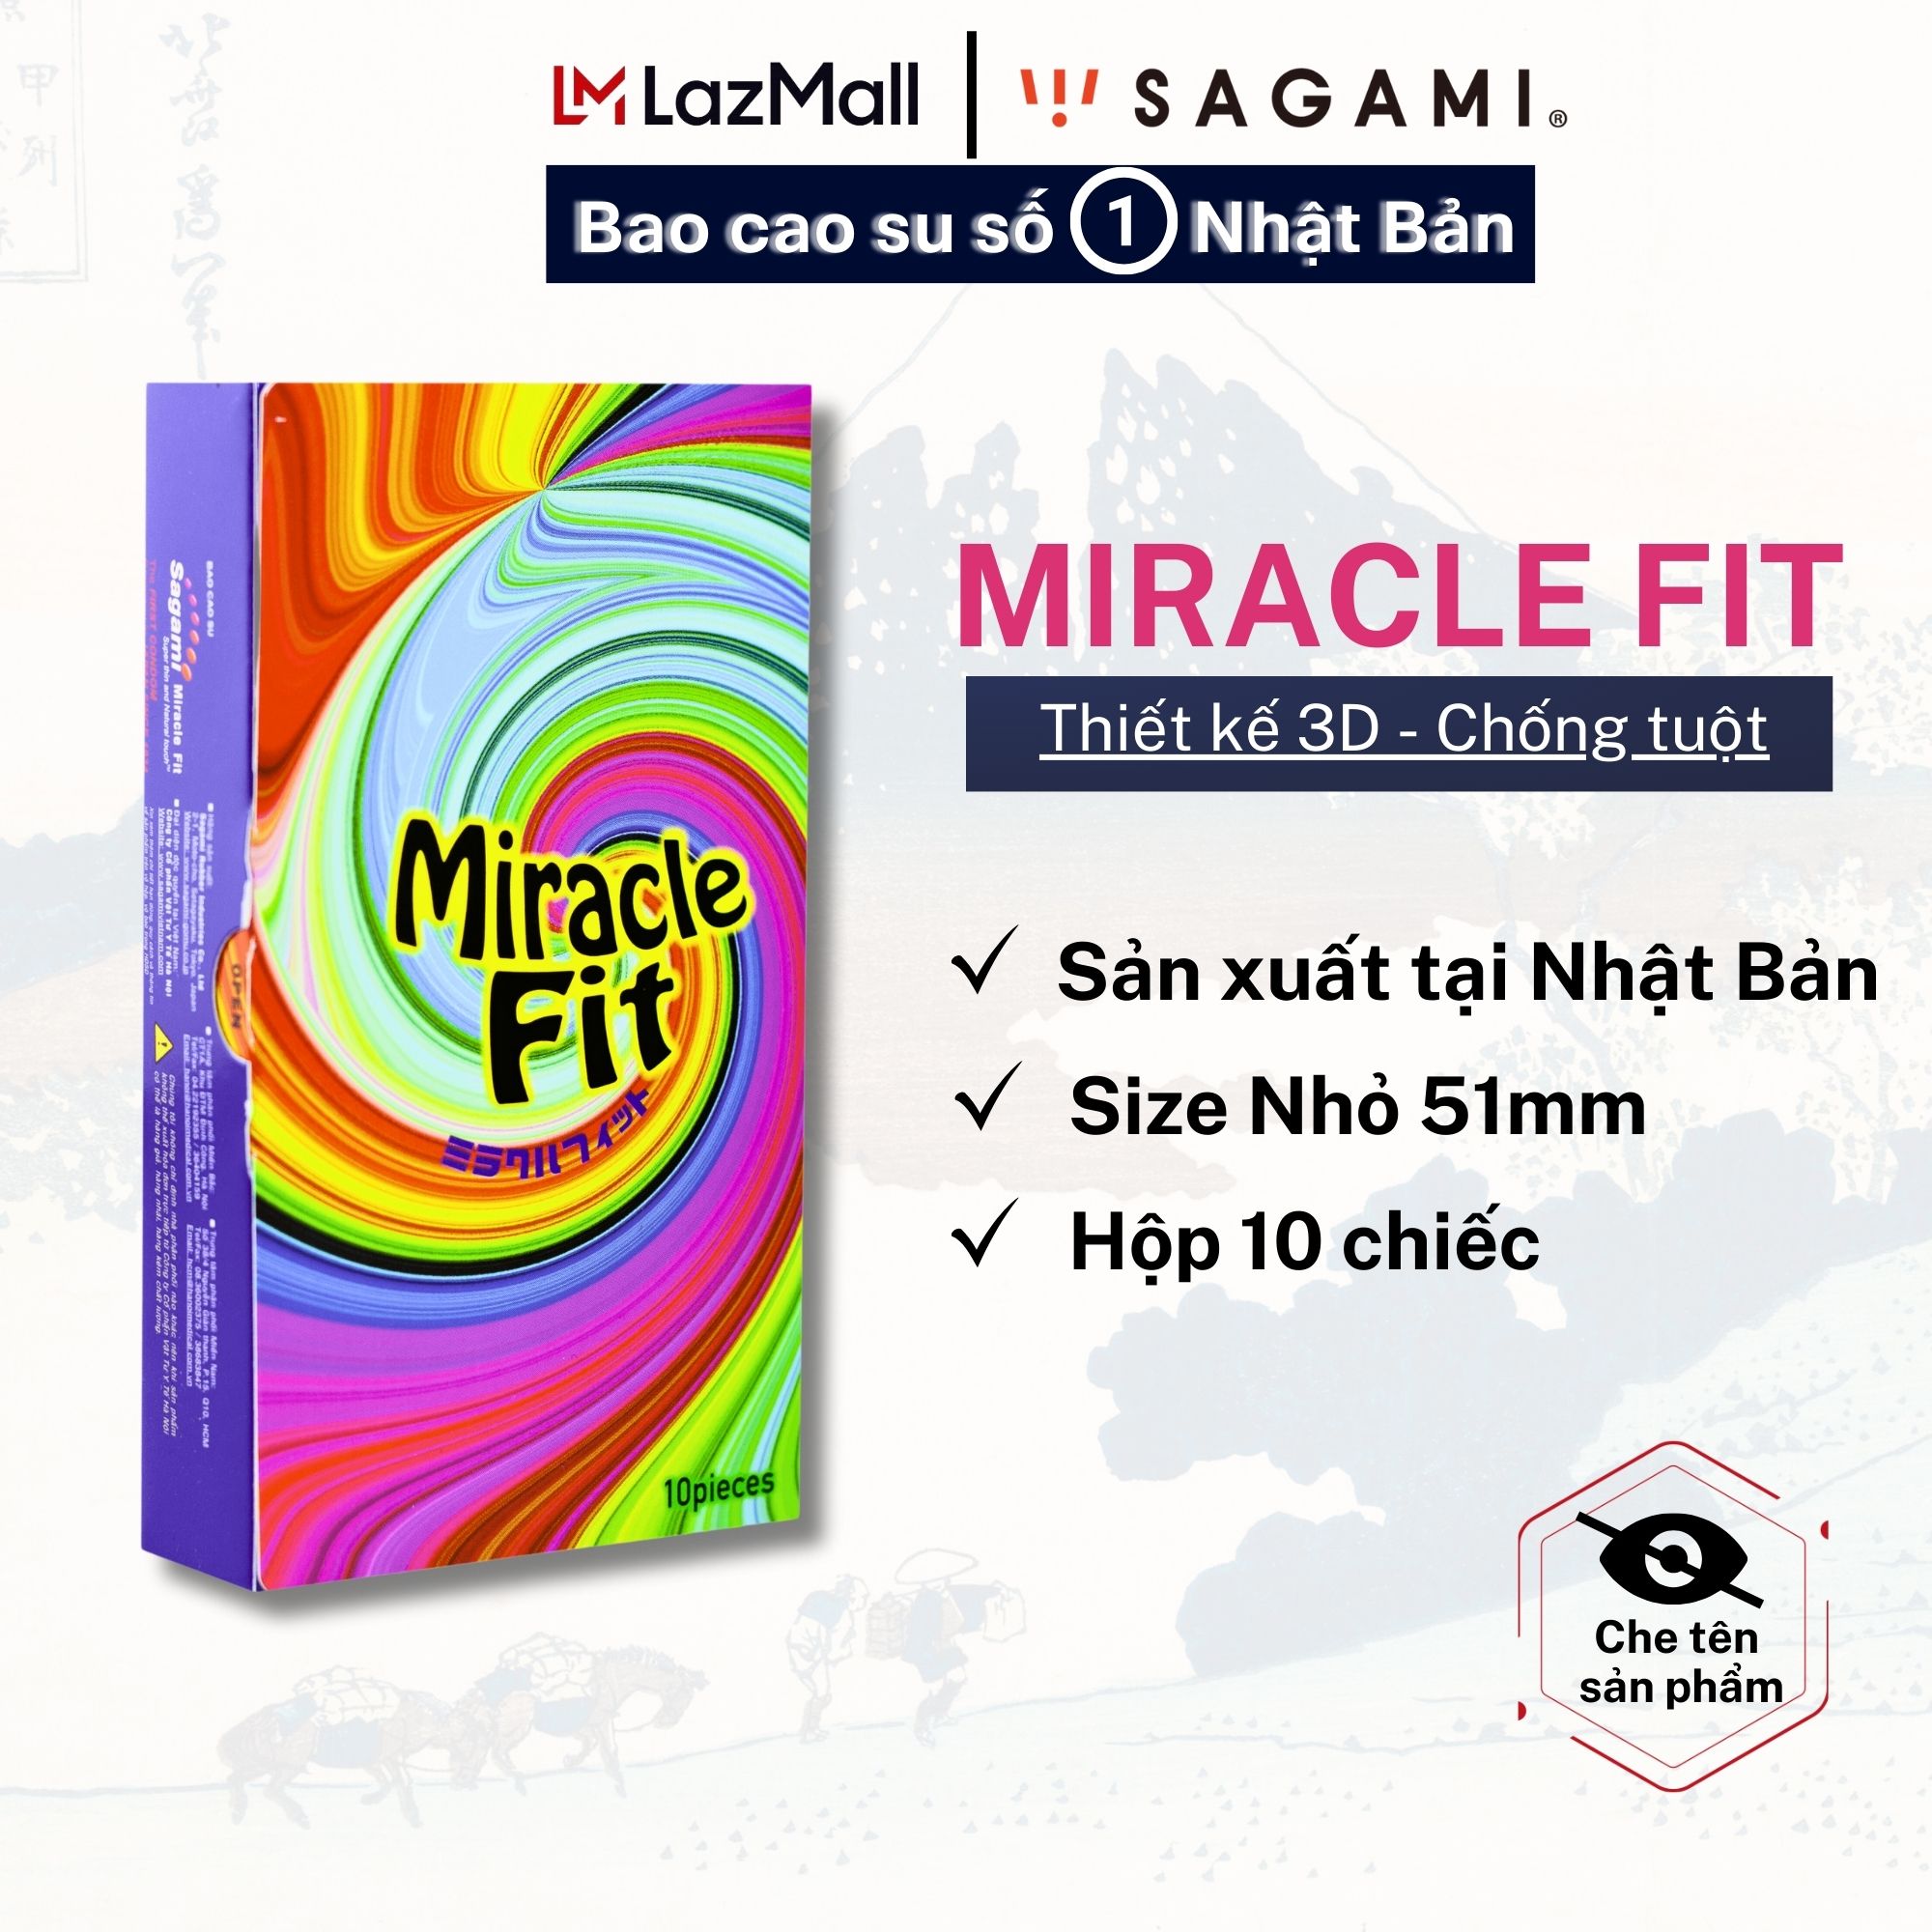 Bao cao su Sagami Miracle Fit 3D ( hộp 10 chiếc) - baocao su nam size nhỏ 51mm siêu mỏng Sagami chính hãng